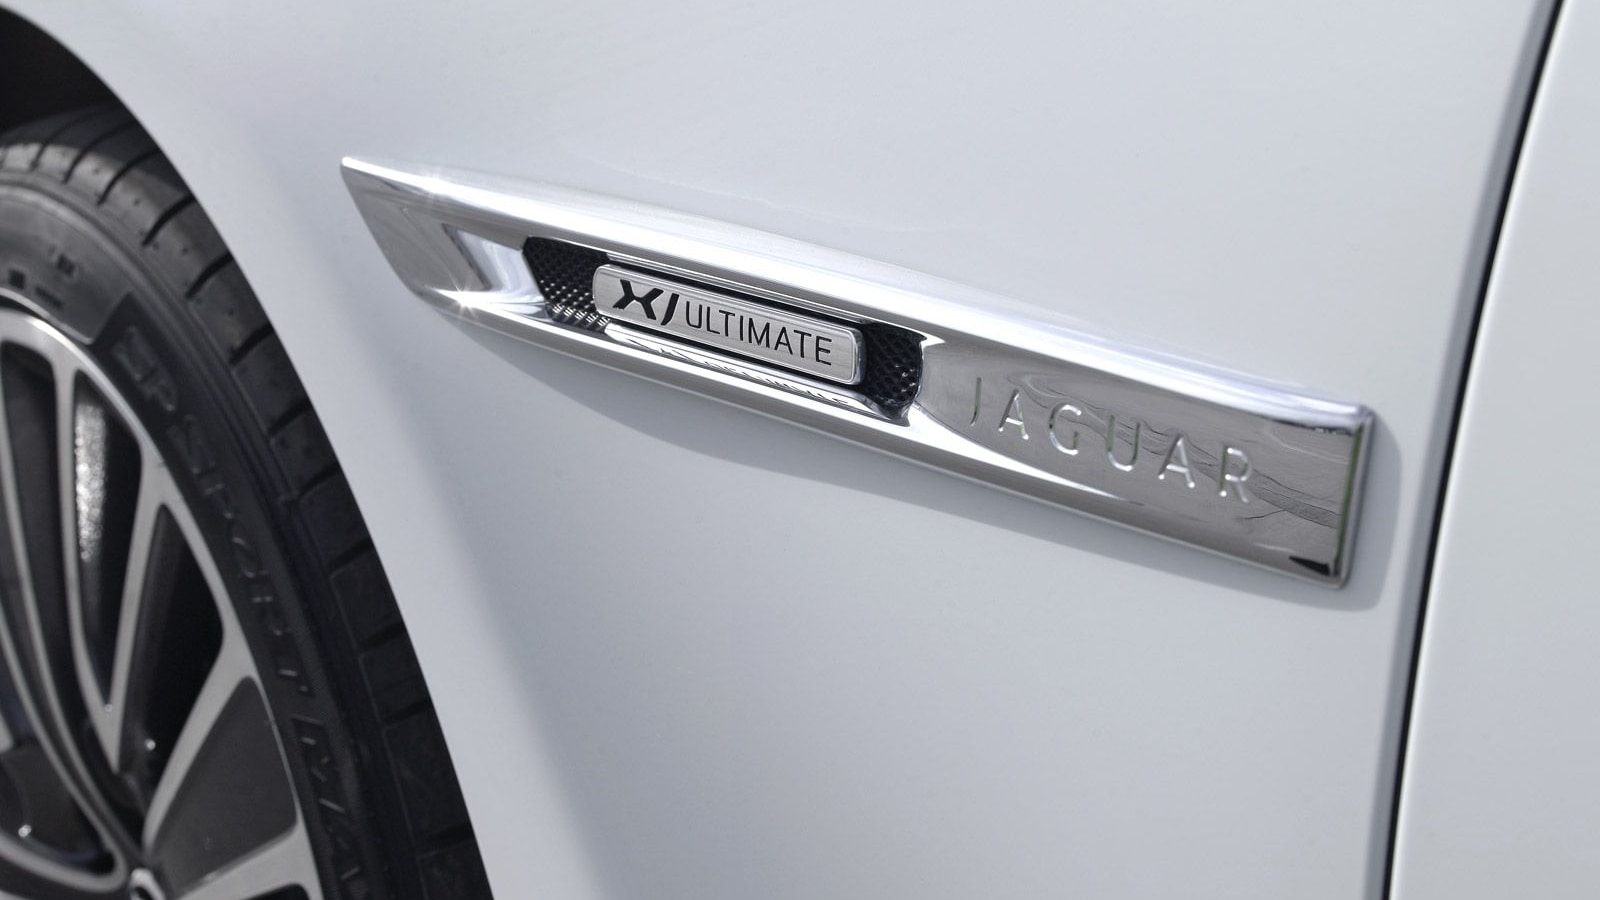 2012 Jaguar XJ Ultimate Edition